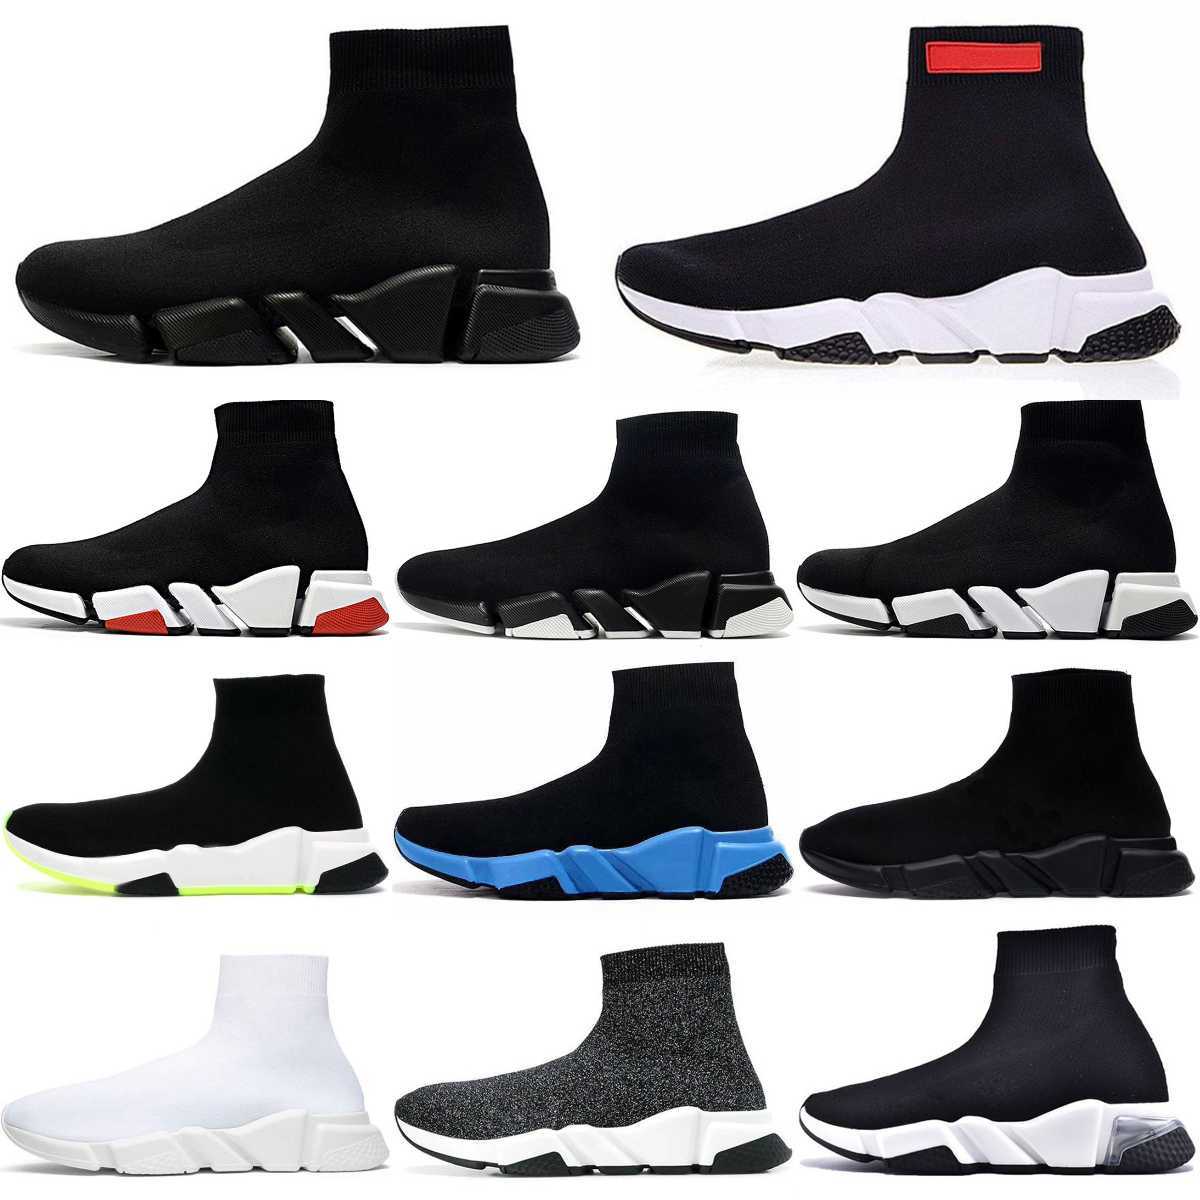 Designers Speeds 2.0 V2 Luxury Casual Shoes Platform Sneaker Men Women Tripler s Paris Socks Boots Black White Blue Light Sliver Ruby Graffiti Trainers Sneakers S8